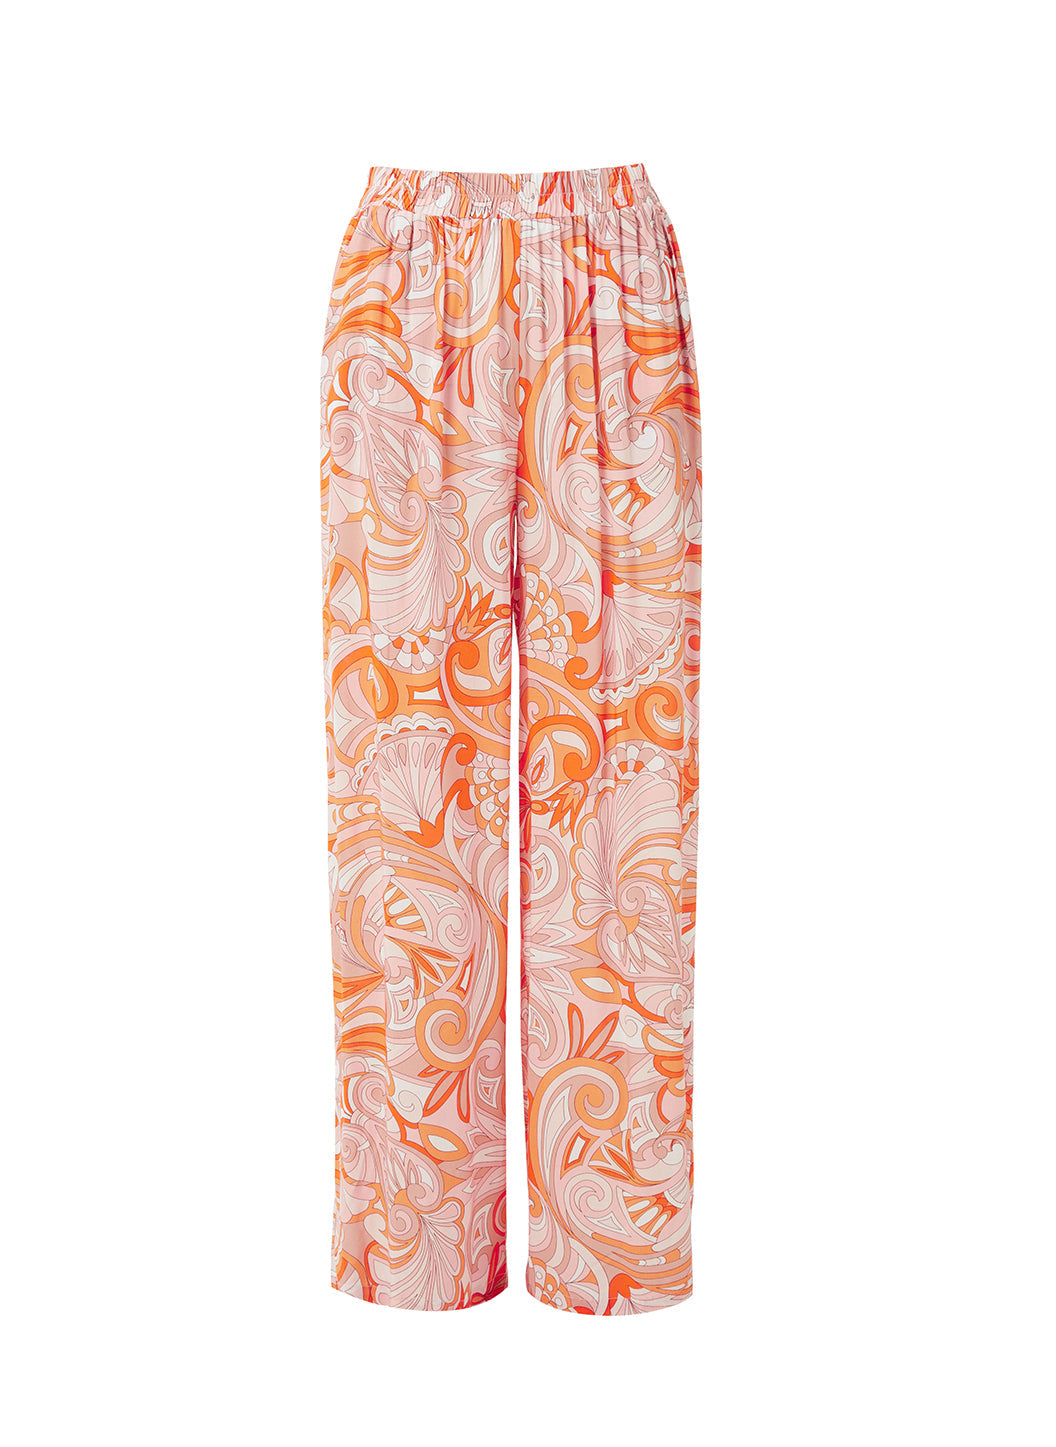 ZARA 2021 SS WIDE-LEG FULL-LENGTH Pants High Waist COLOURED Trousers Orange  M | eBay